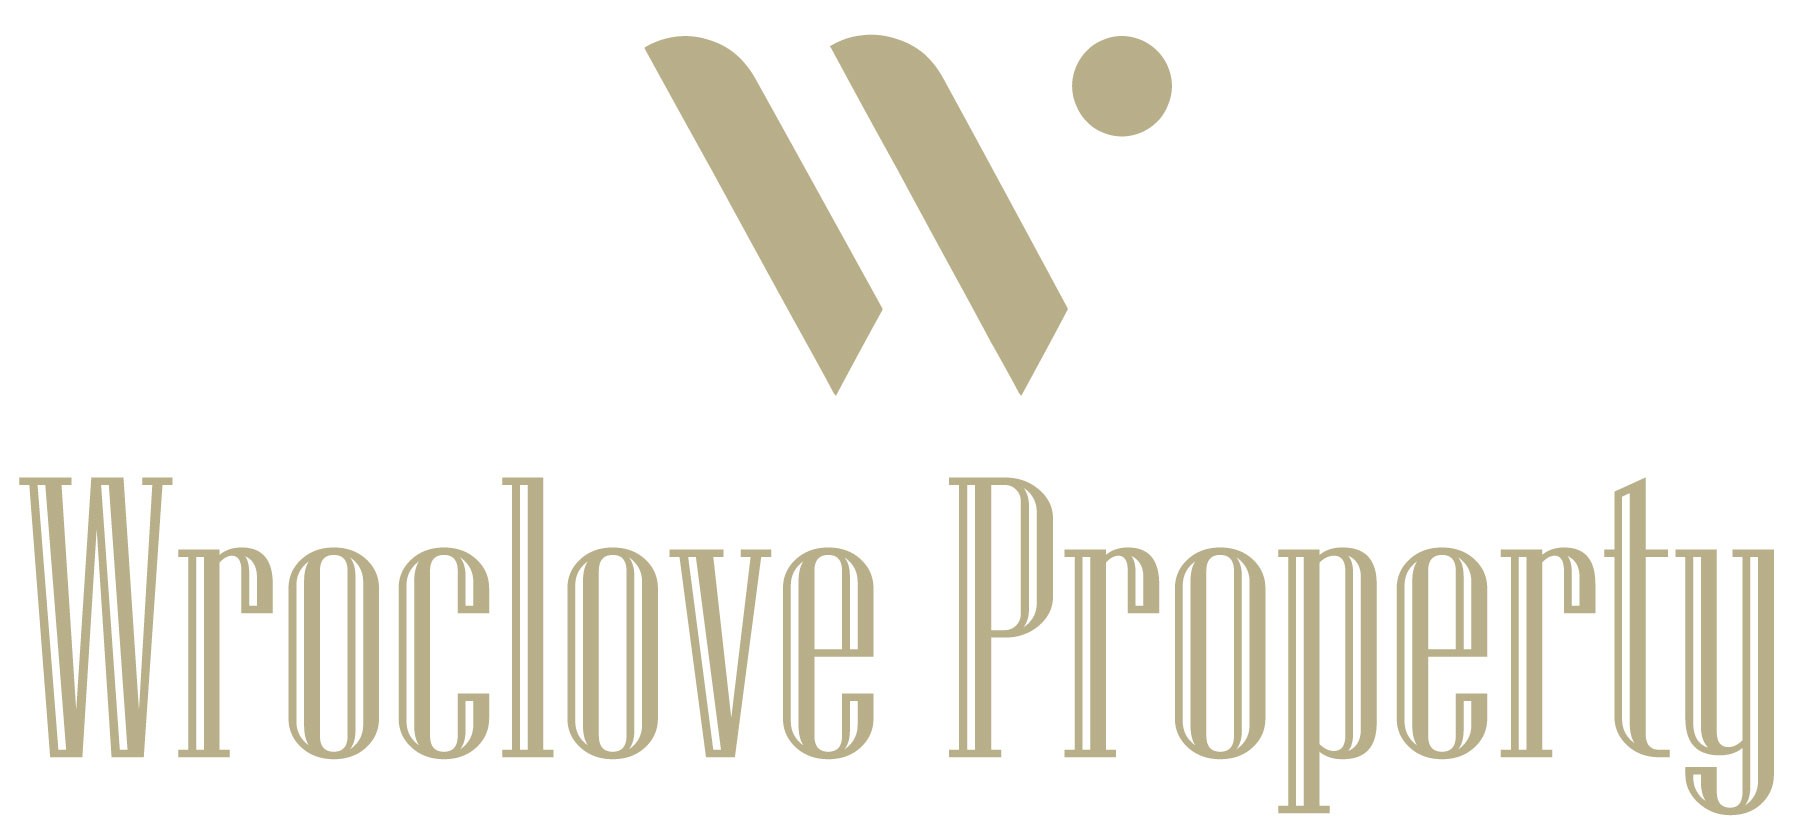 Logo Wroclove Property